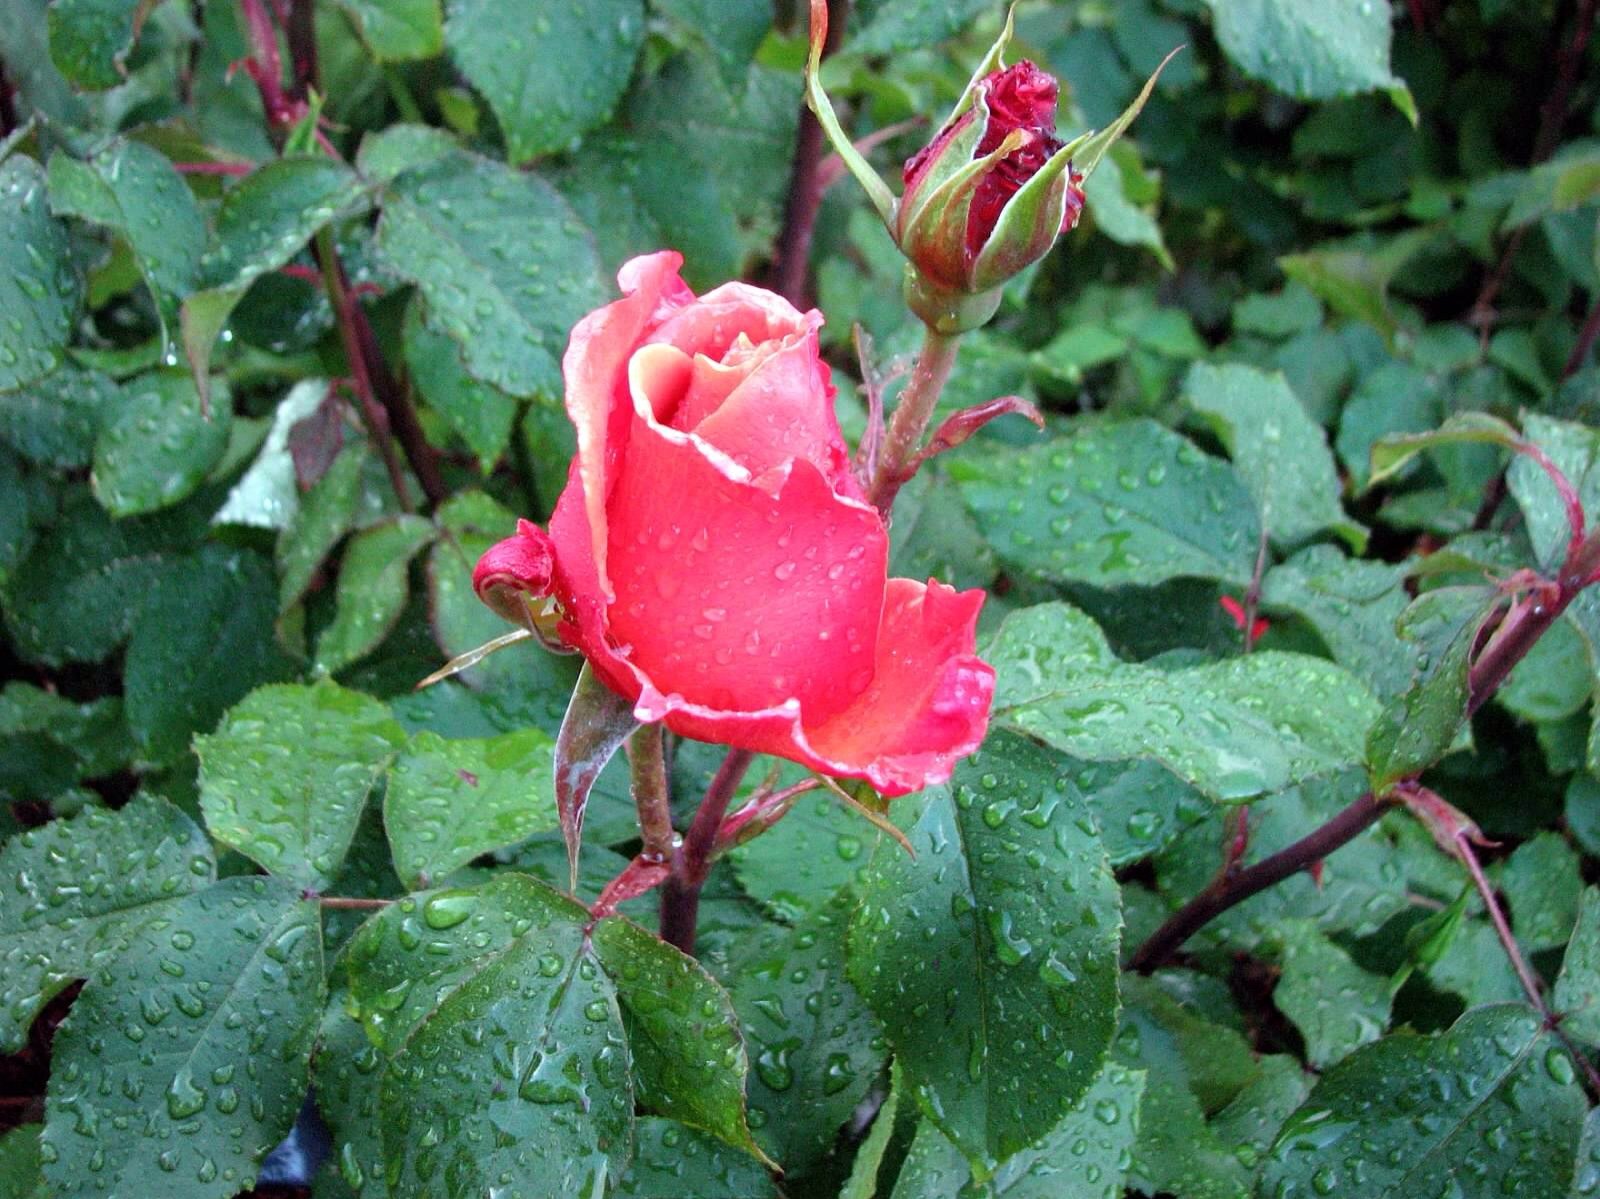 Rose in the rain